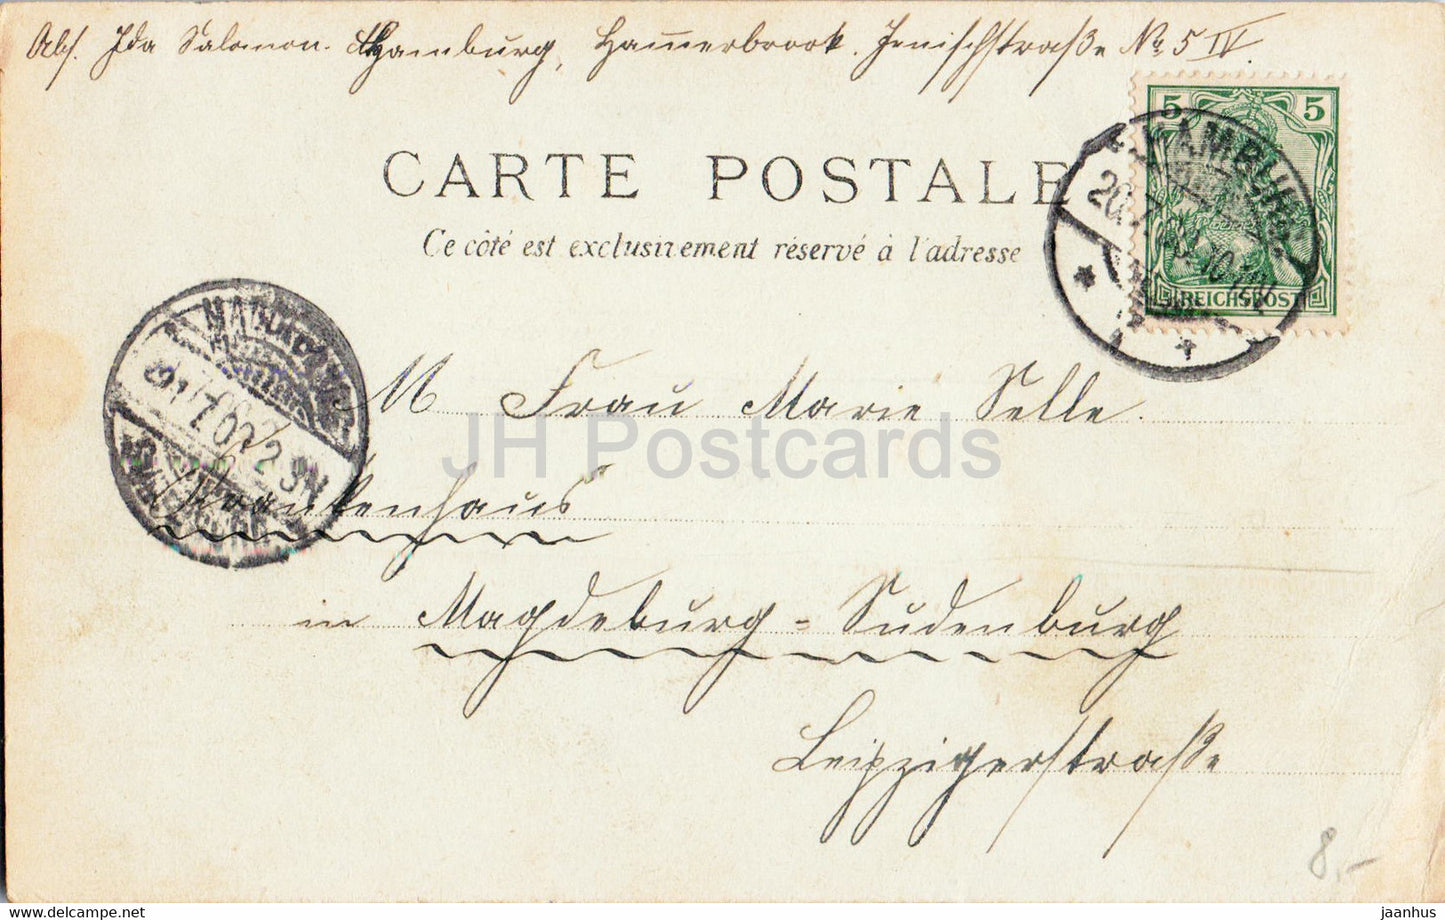 Paris - Exposition Universelle 1900  - Grand Restaurant  Gruber et Cie - old postcard - 1900 - France - used